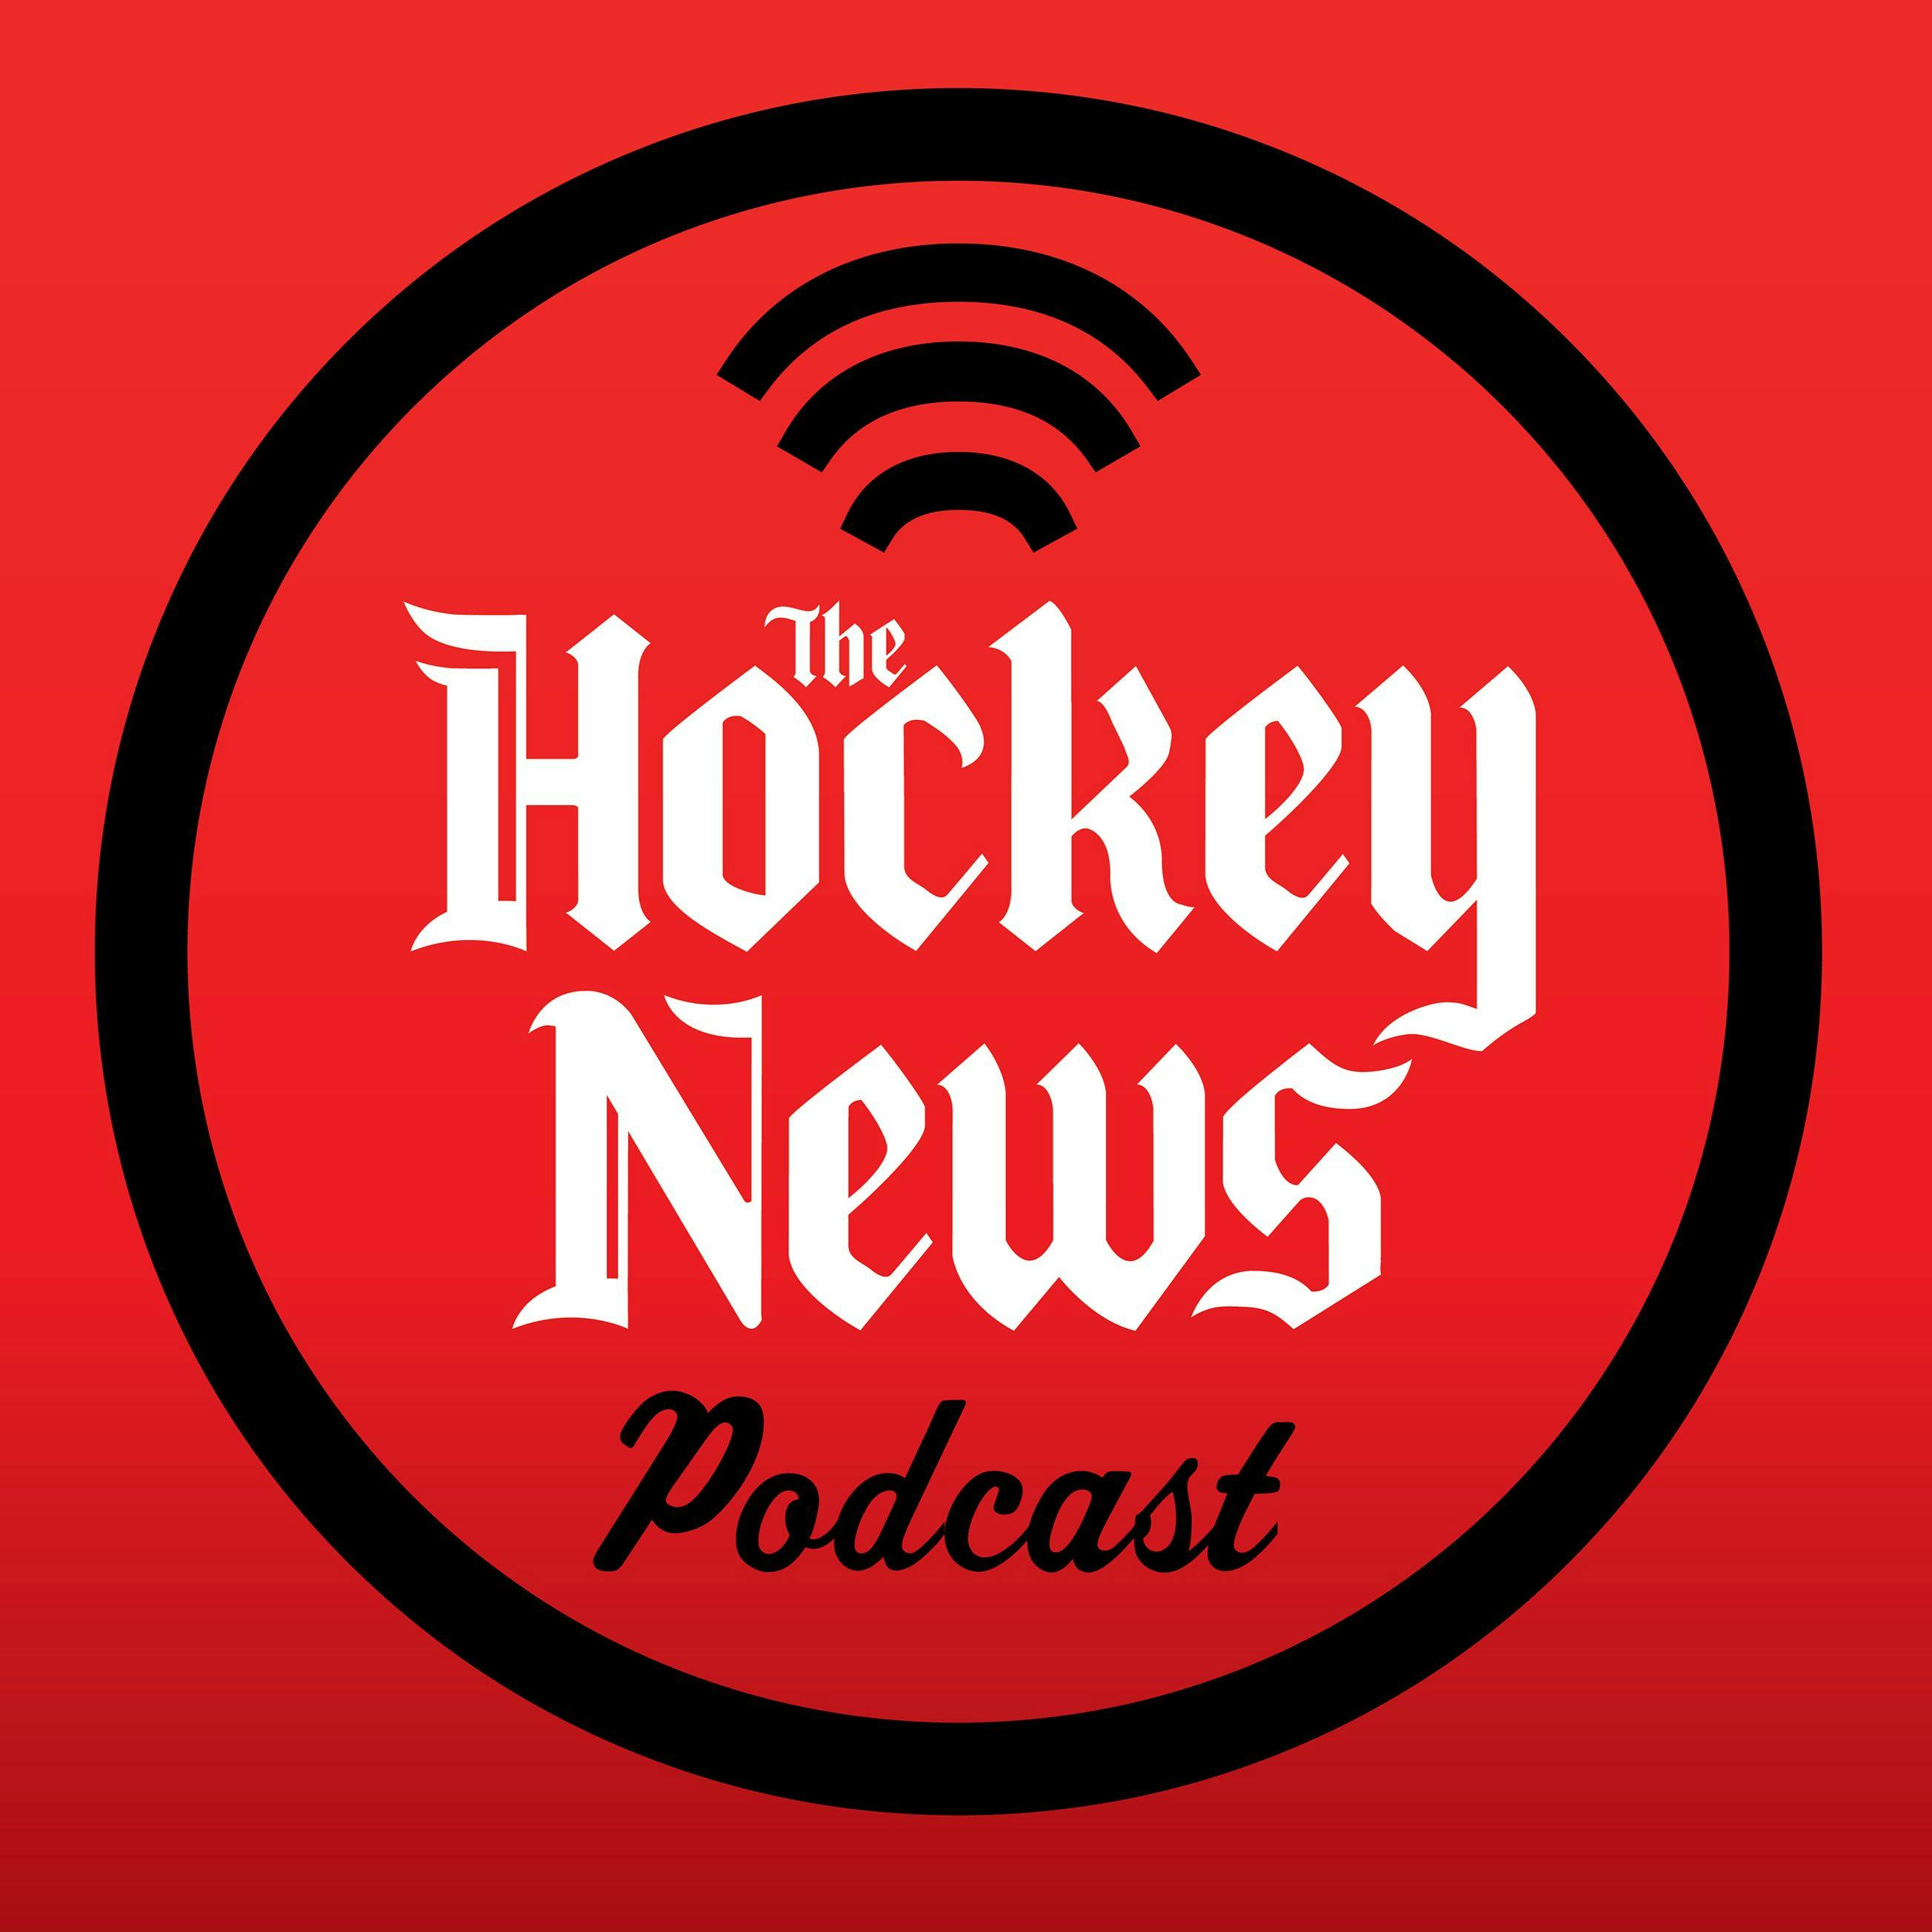 The Hockey News Podcast: Breaking Down the NHL's Pre-Season